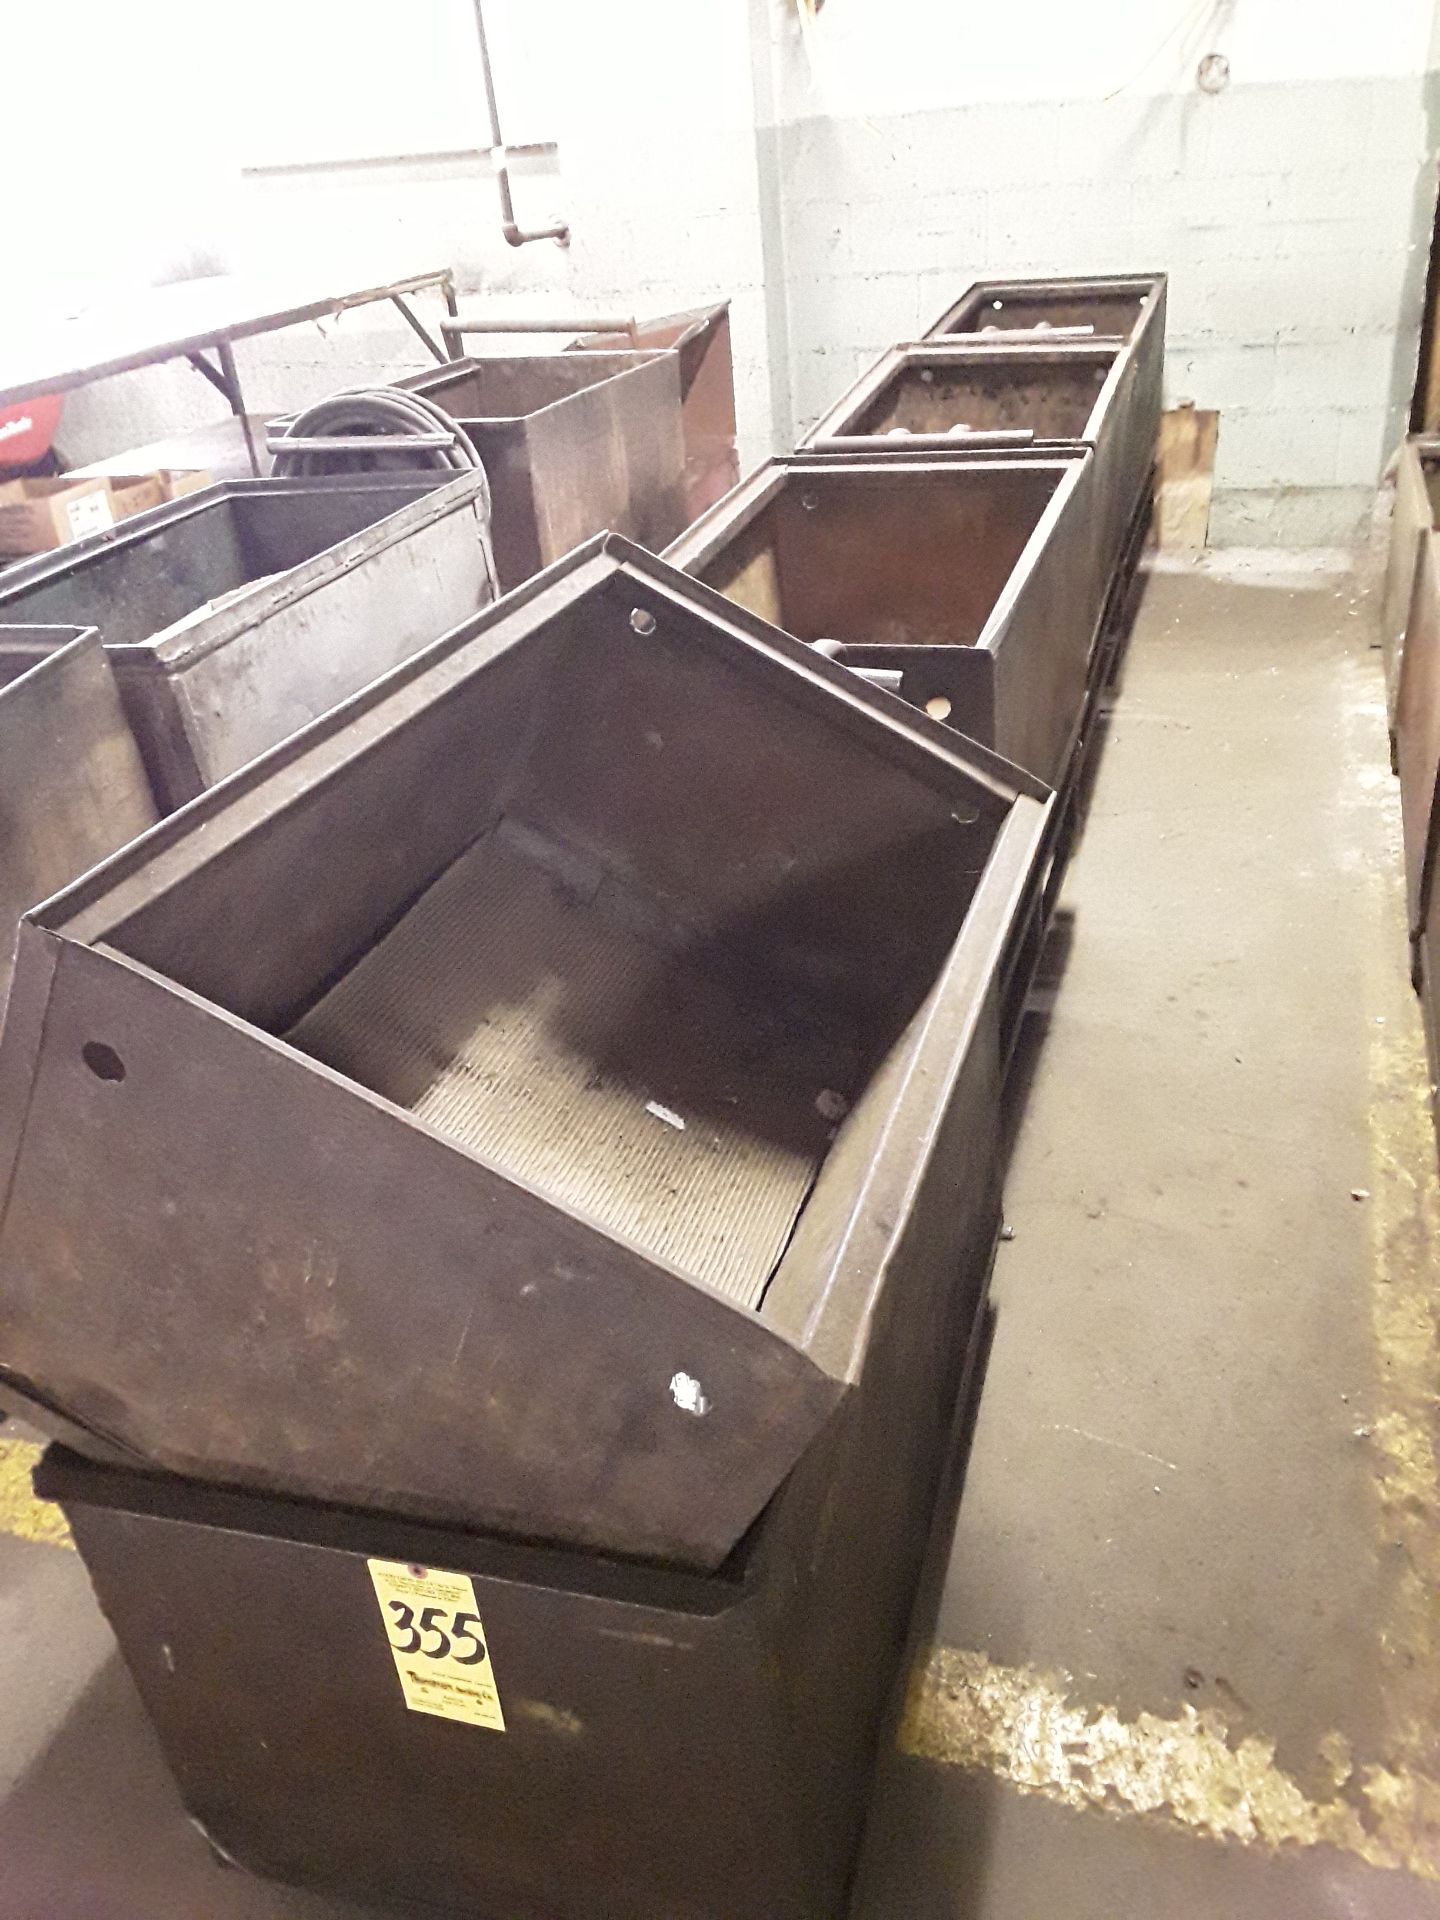 (2) Metal Tubs and (3) Metal Tubs on Carts